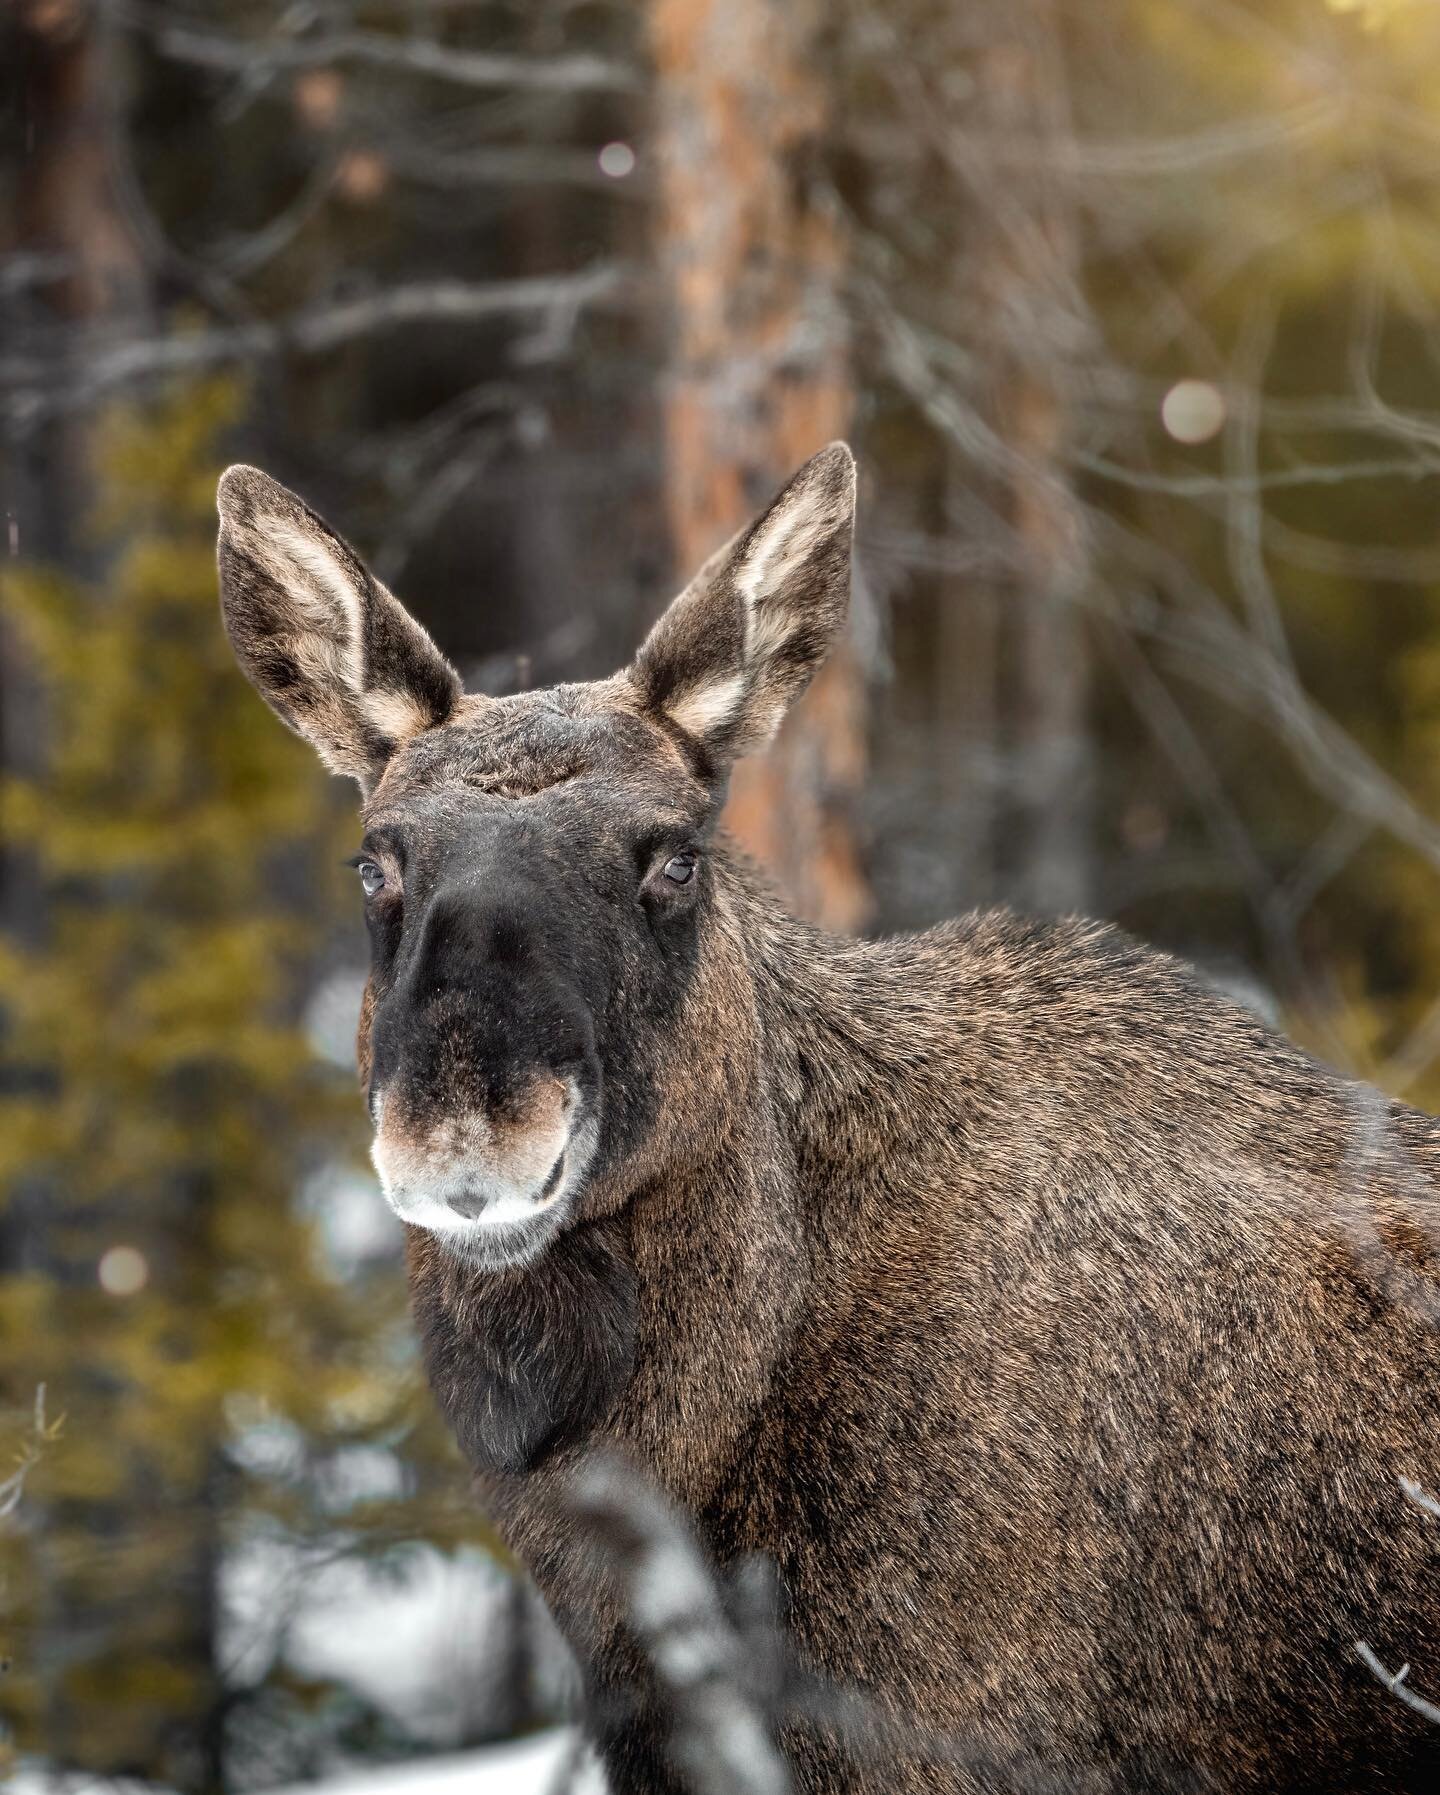 ↠ Beautiful eye contact with this moose 👁️🌲🦌

#sonyalpha #sonyambassador #bealpha #a1 #sonya1 #sony200600 #sel200600 #sony200600mm #sony200600g #moose #&auml;lg #wildlifephotography #wildlife #naturephotography #animalovers #animalphotography #the